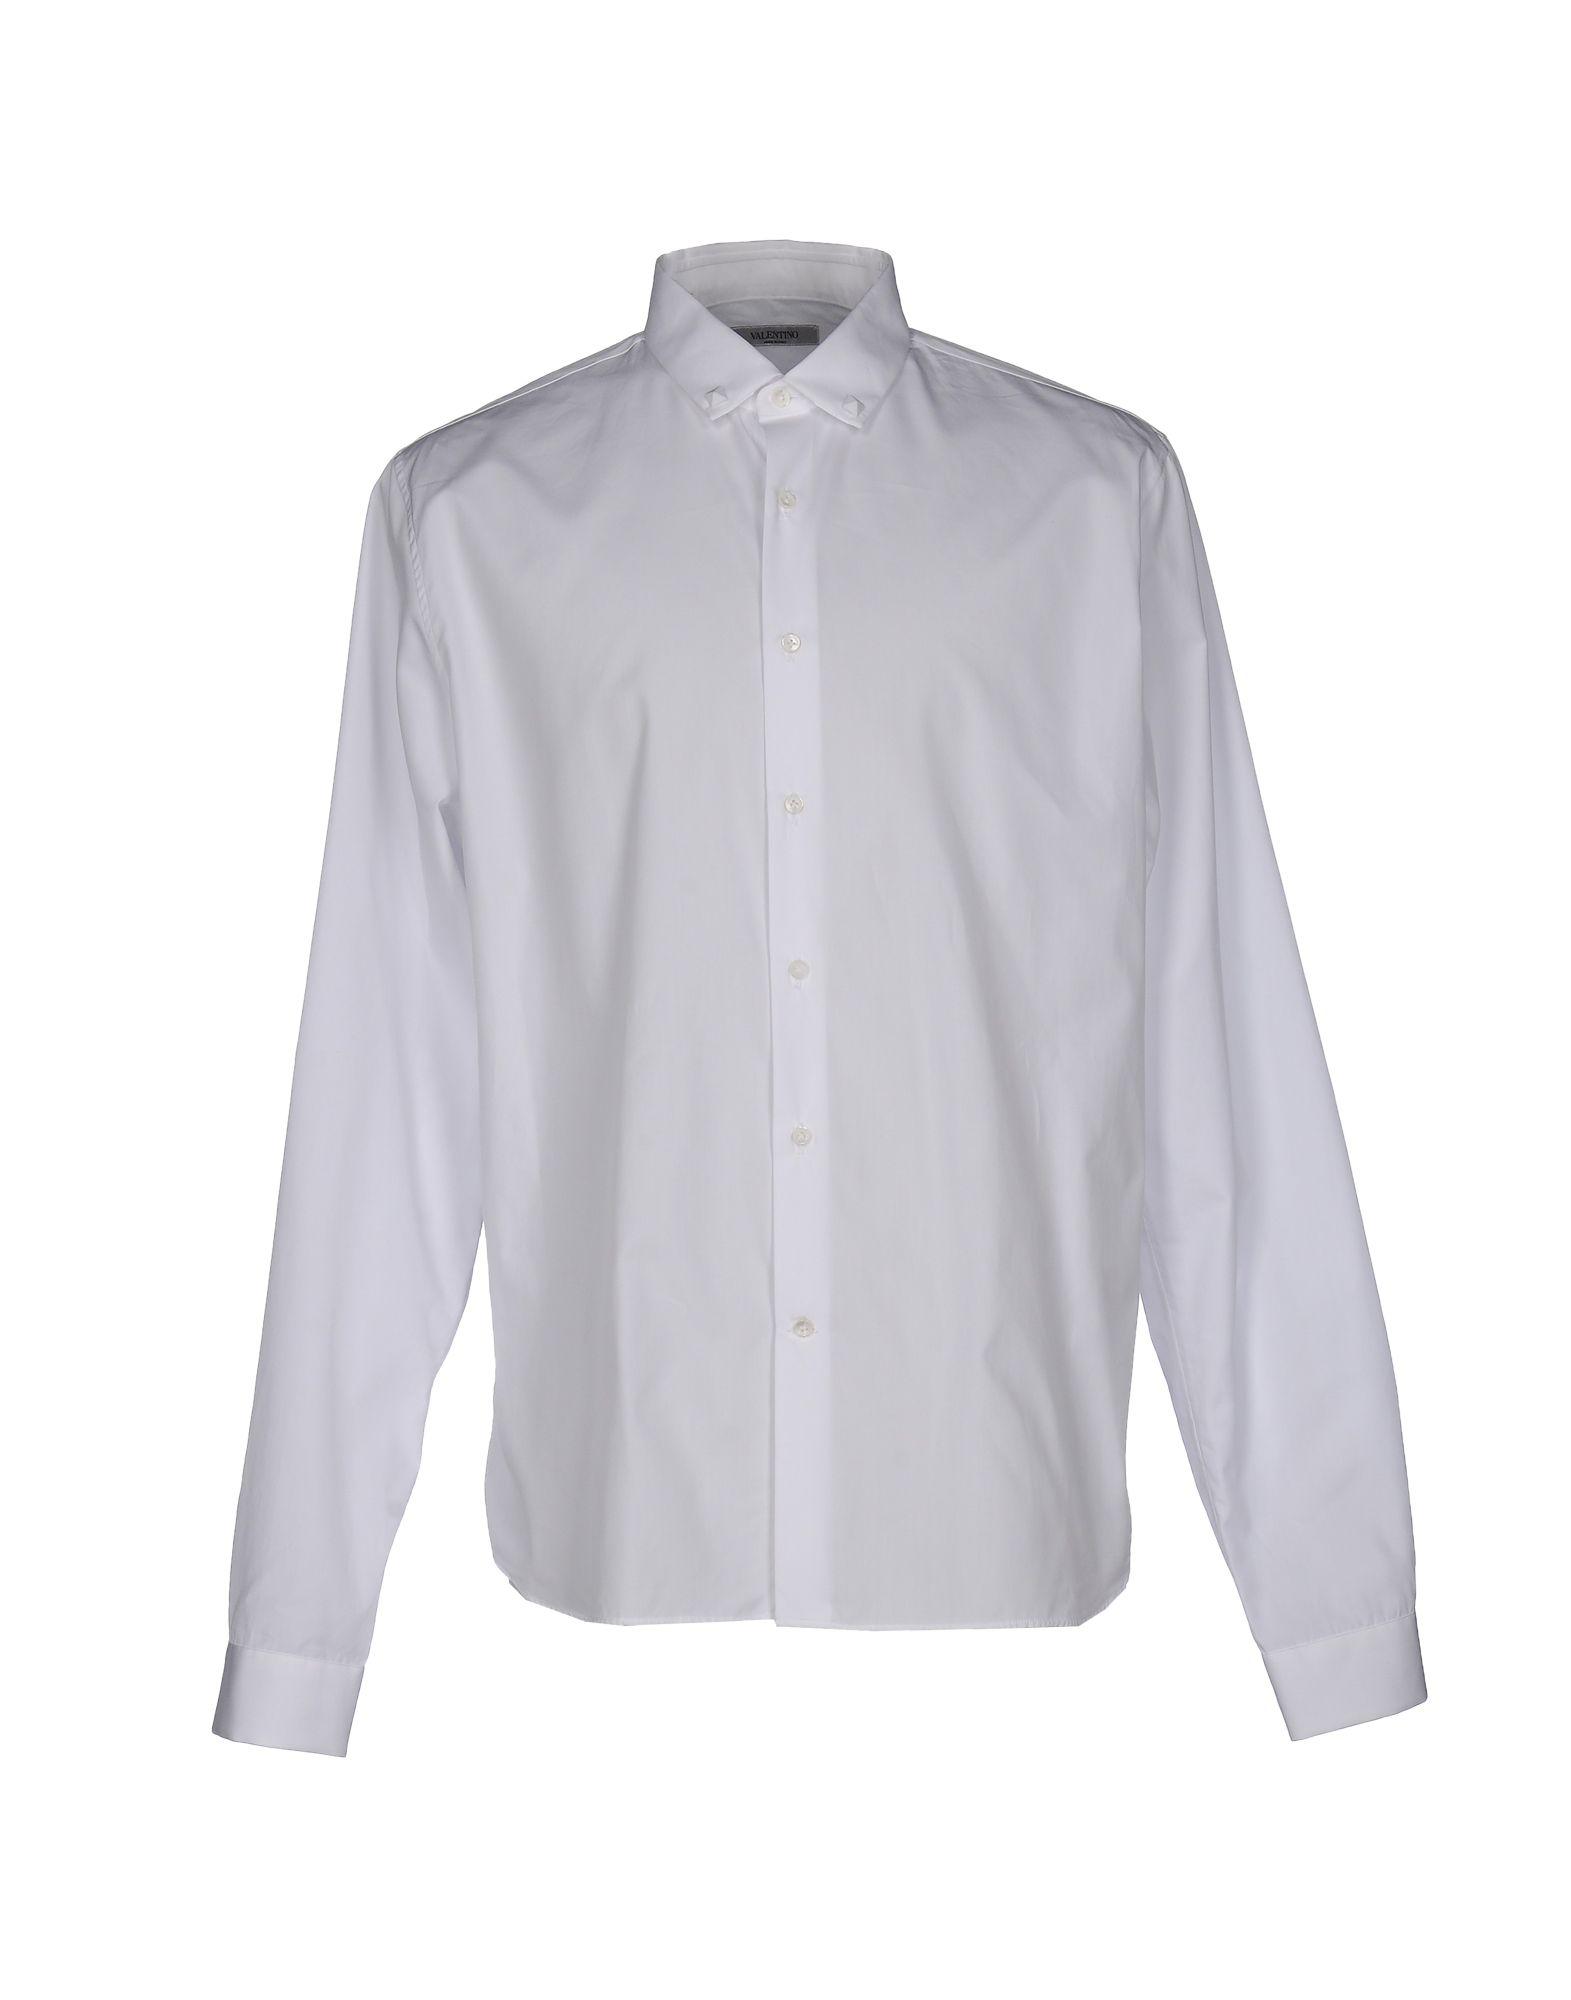 Lyst - Valentino Shirt in White for Men